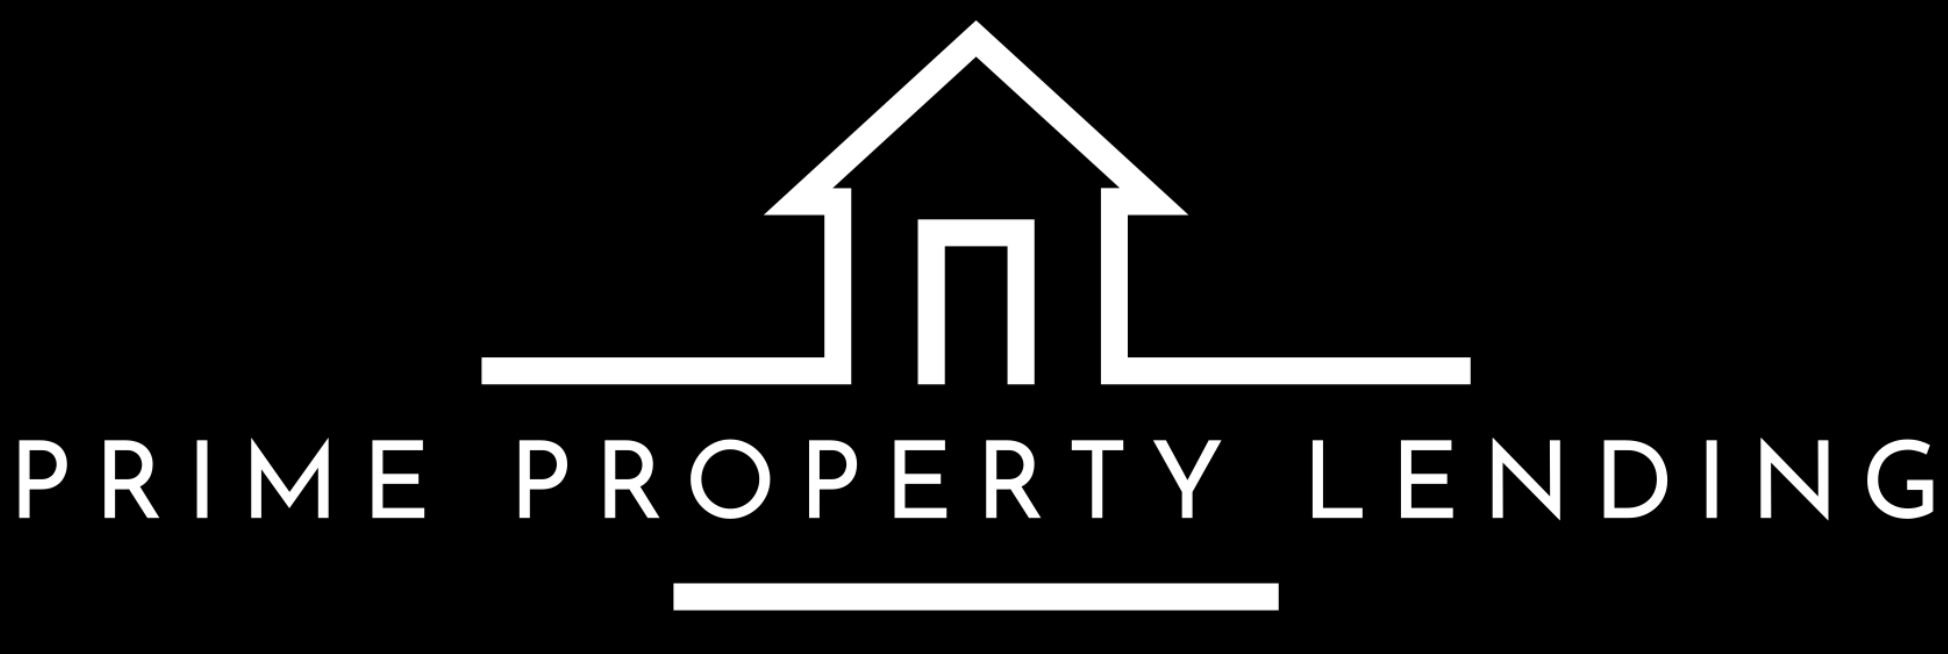 Prime Property Lending